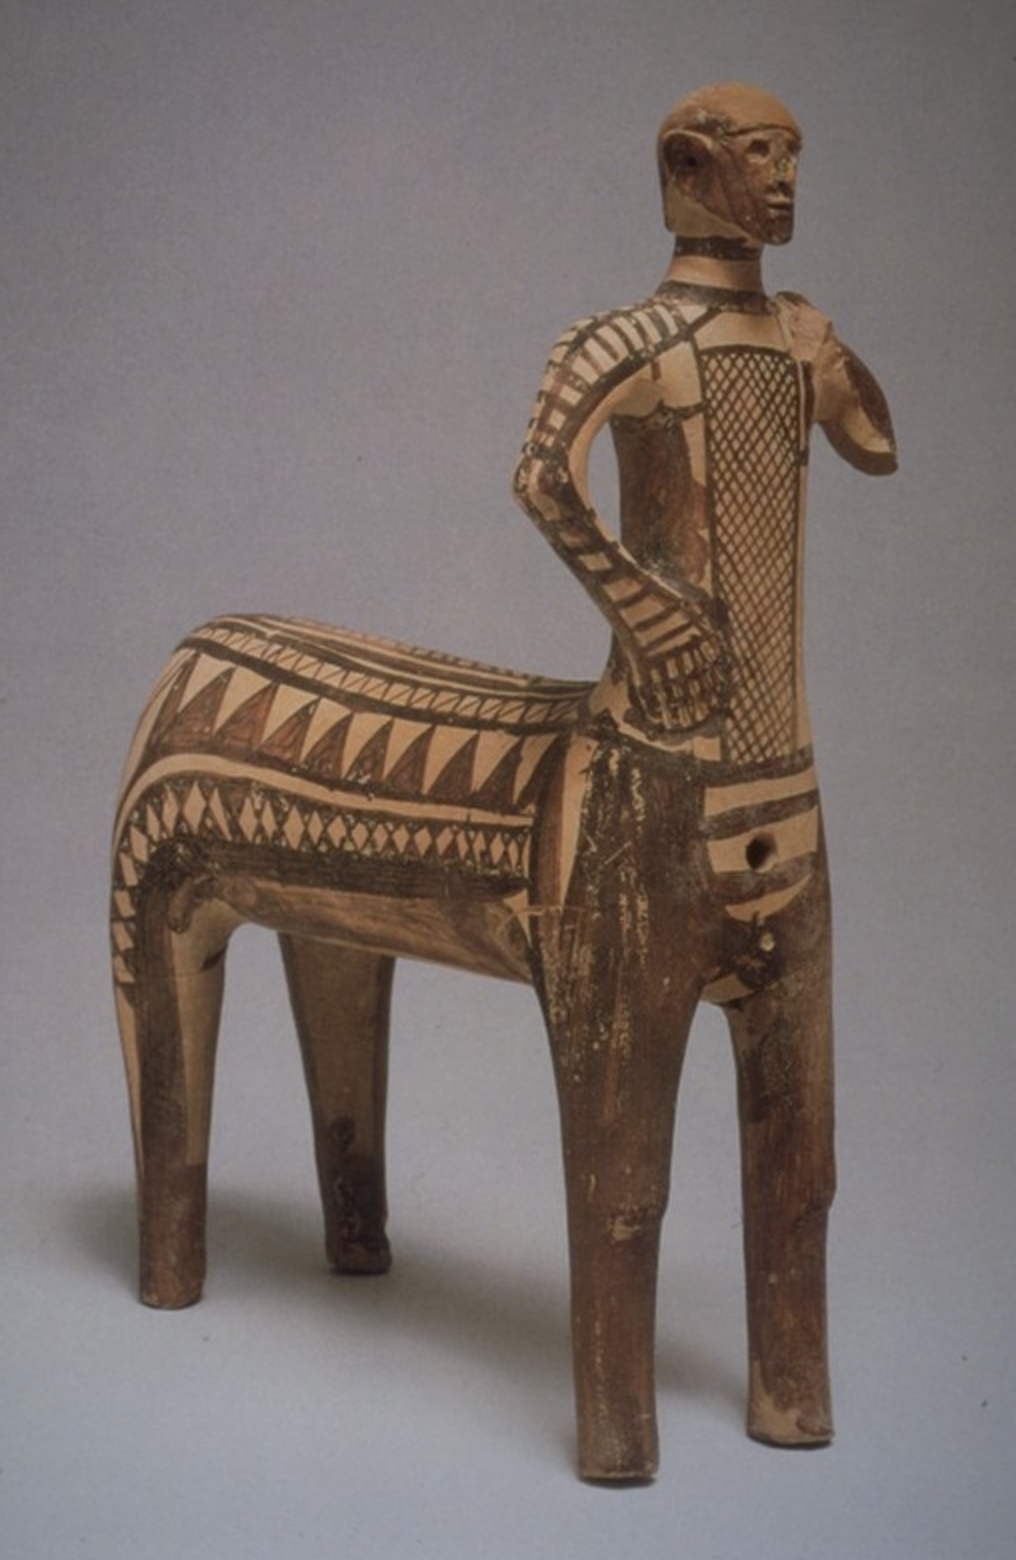 The Centaur from Lefkandi,